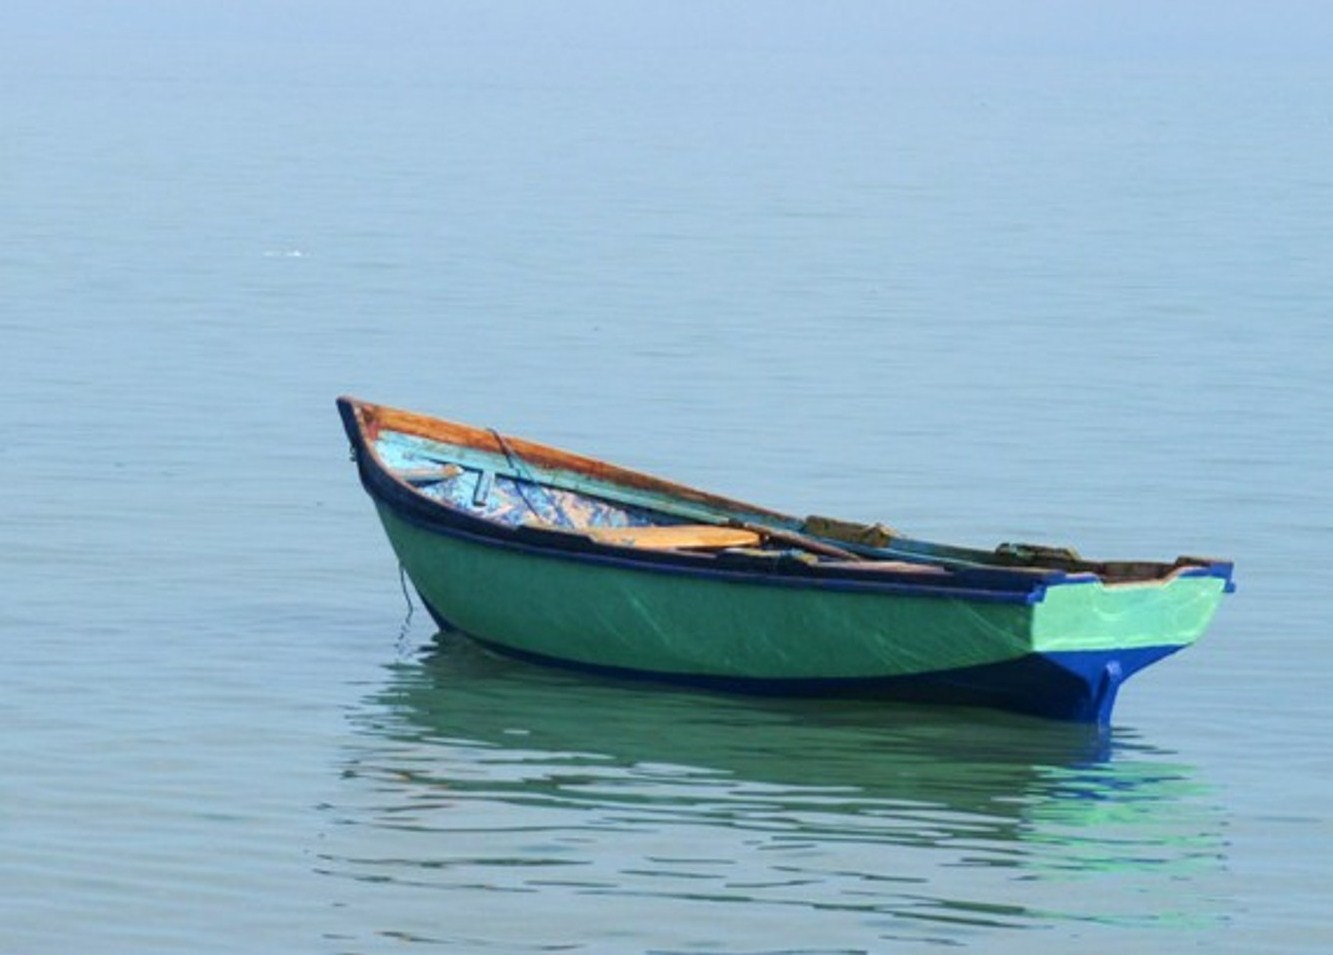 Yola (boat), Miches